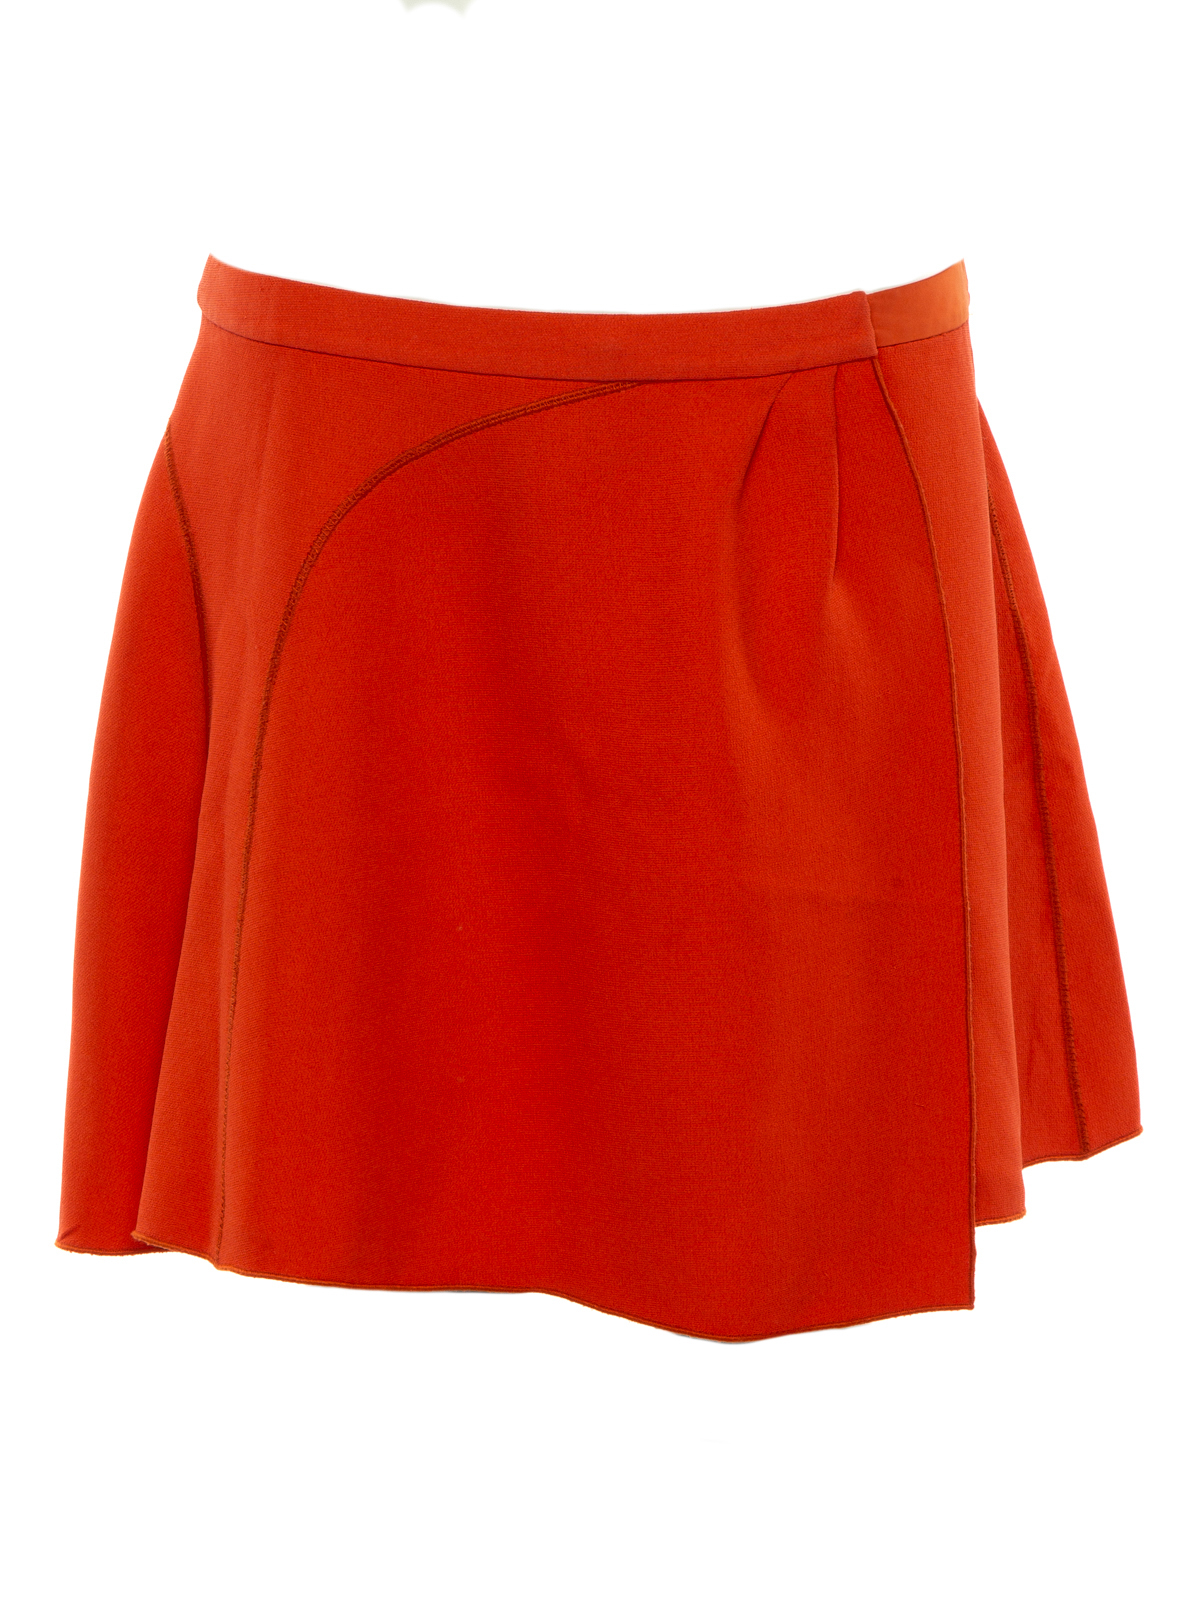 Louis Vuitton Orange Wrap Mini Skirt, Size XS, UK 6, US 2, IT 38, FR 34